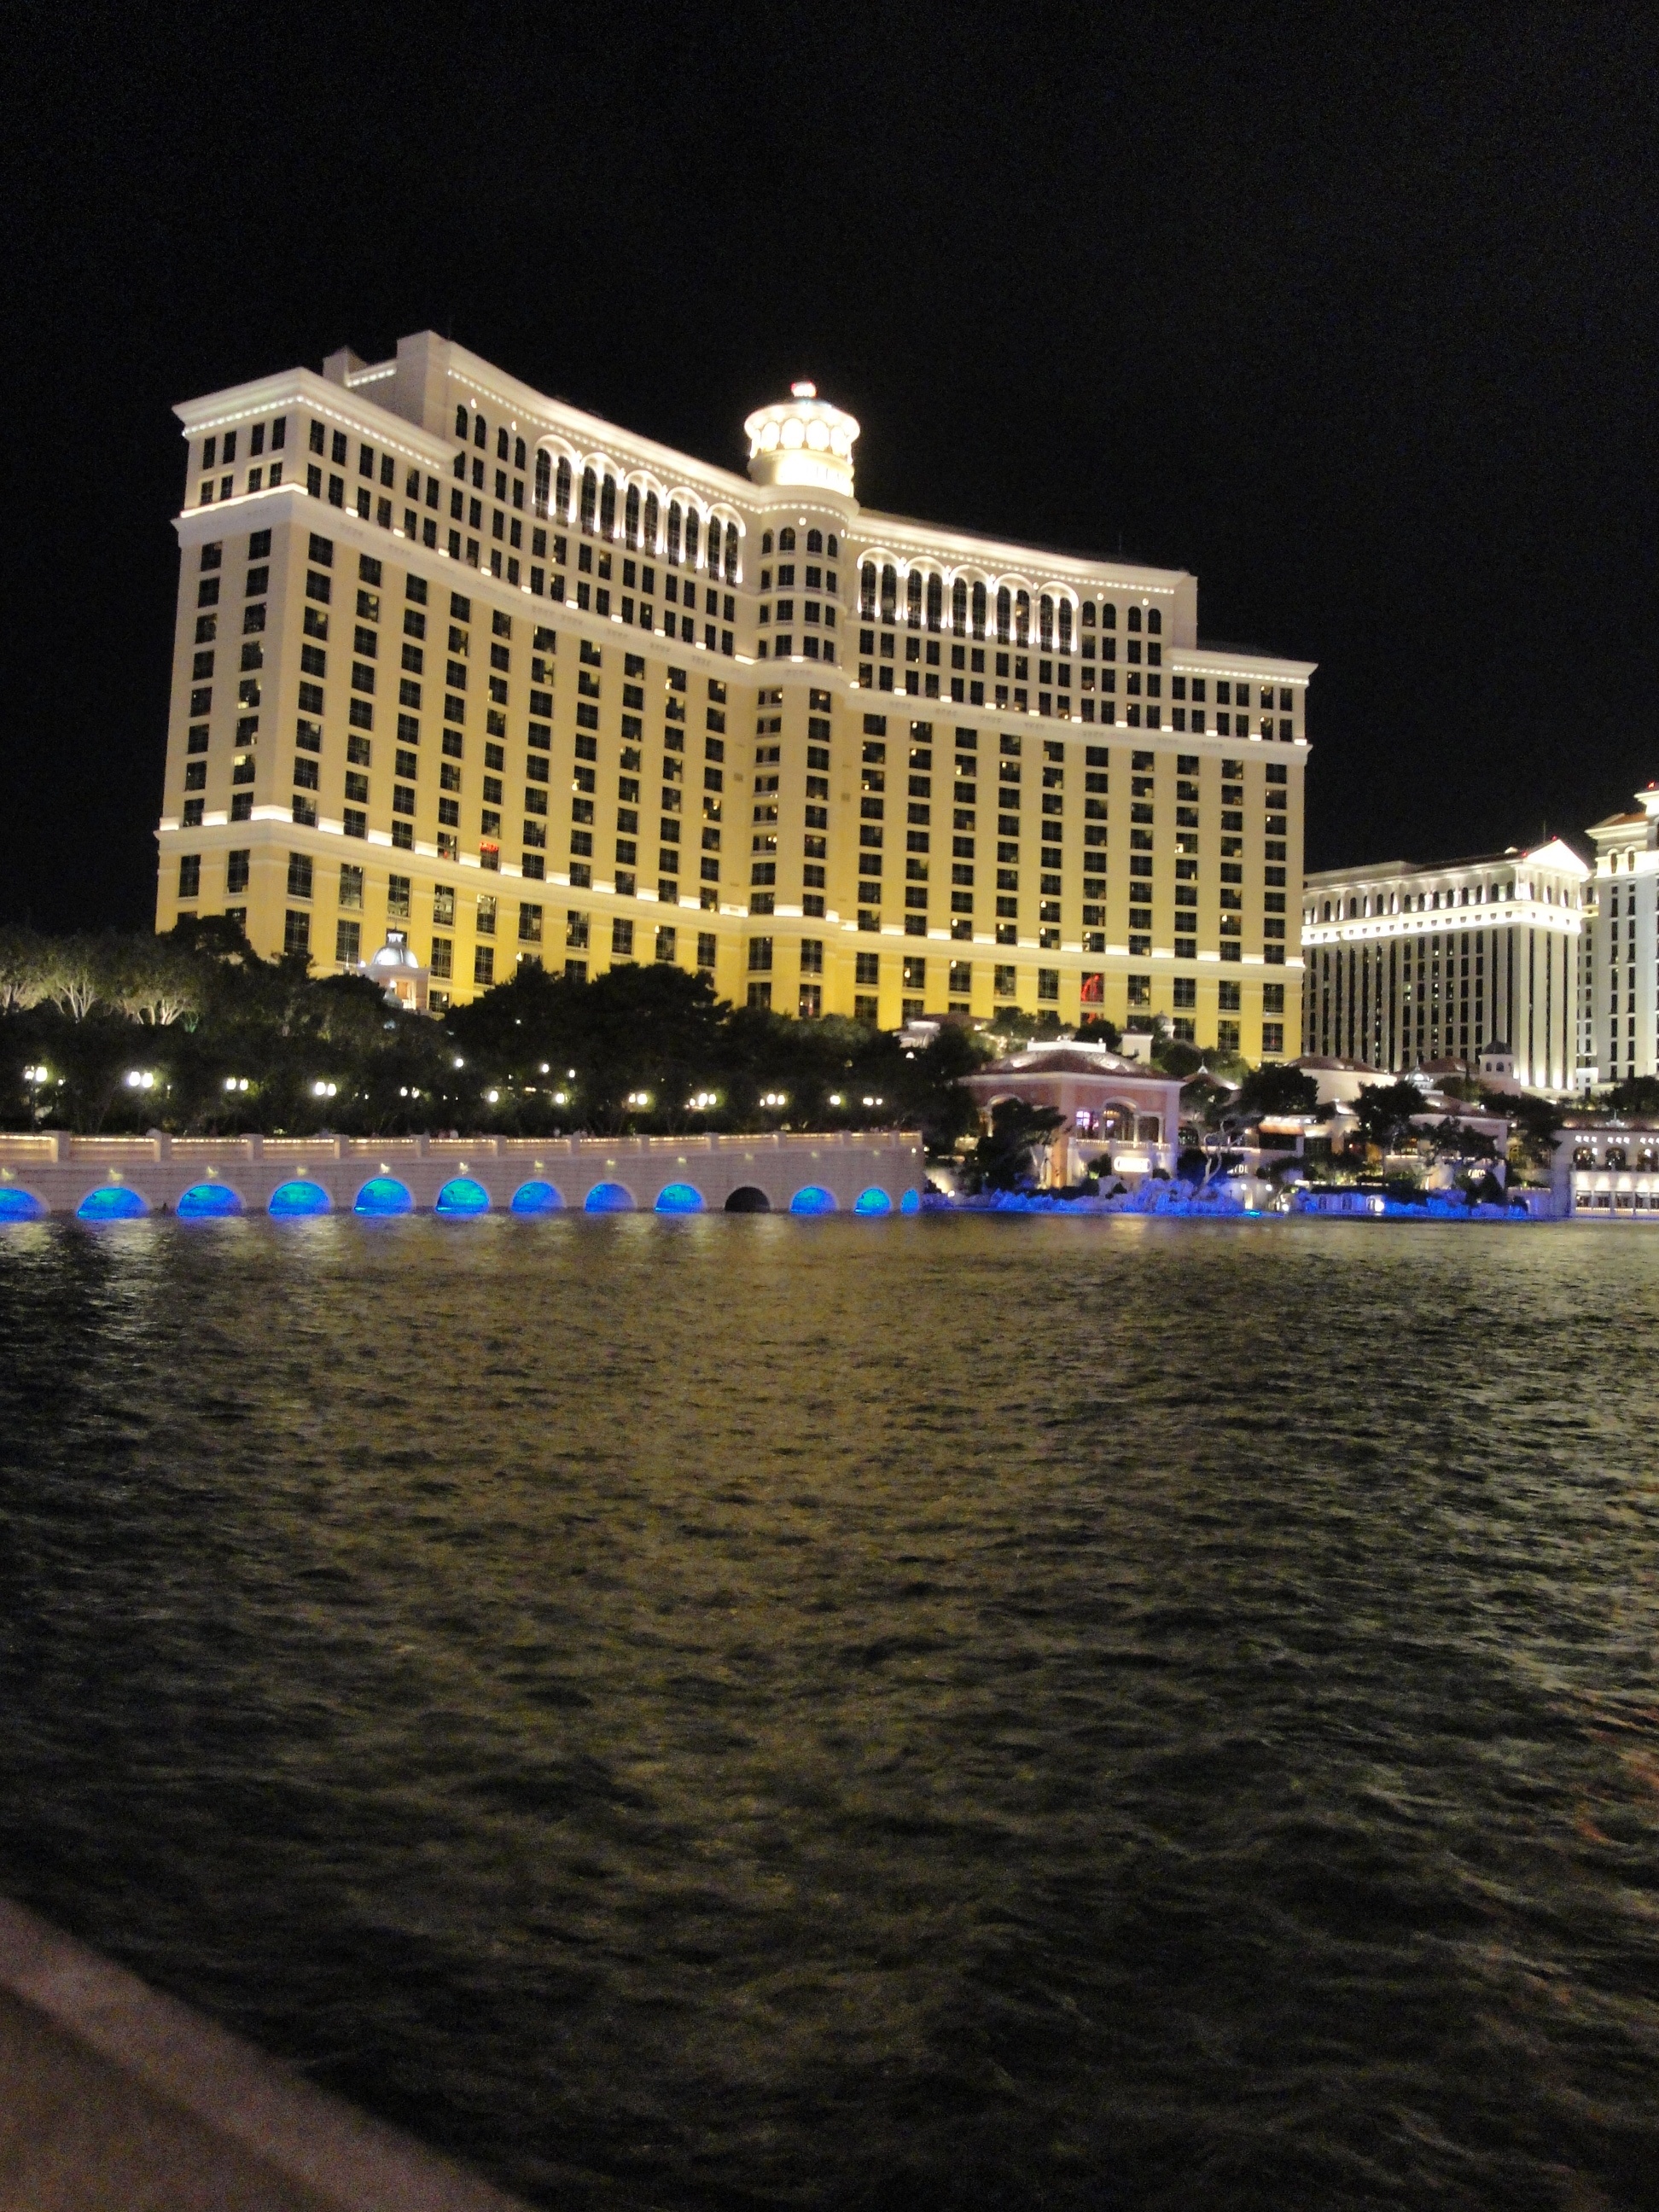 Bellagio Hotel at Night, Las Vegas, Nevada